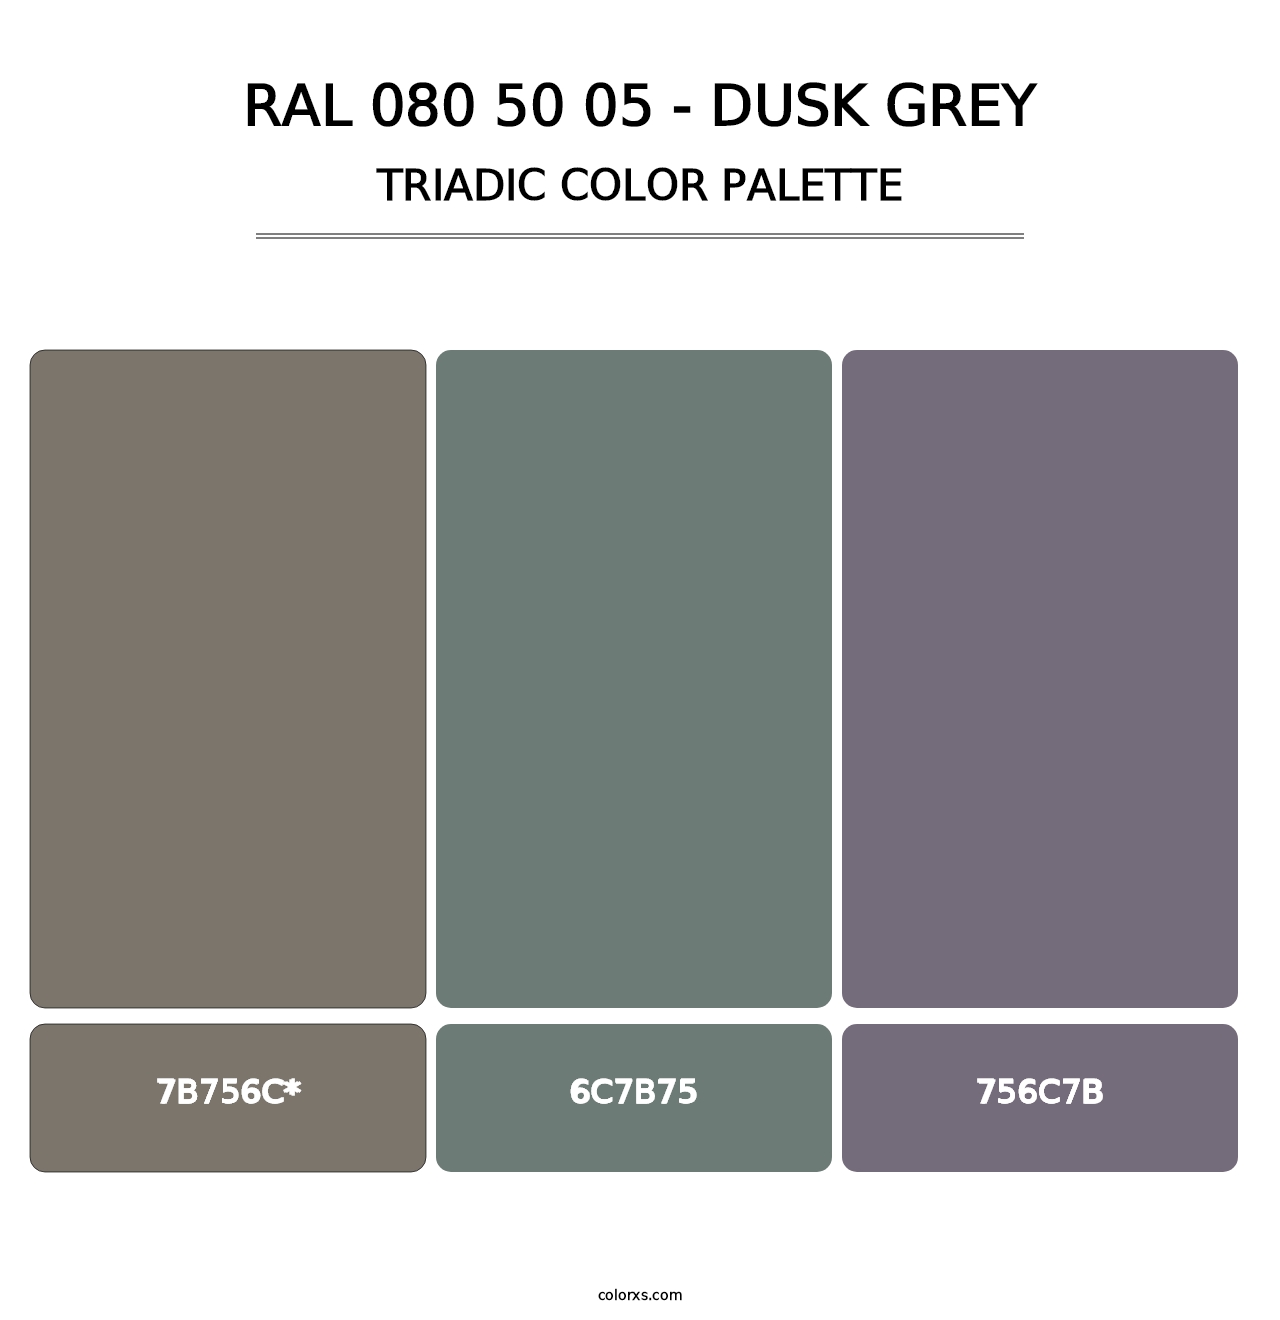 RAL 080 50 05 - Dusk Grey - Triadic Color Palette